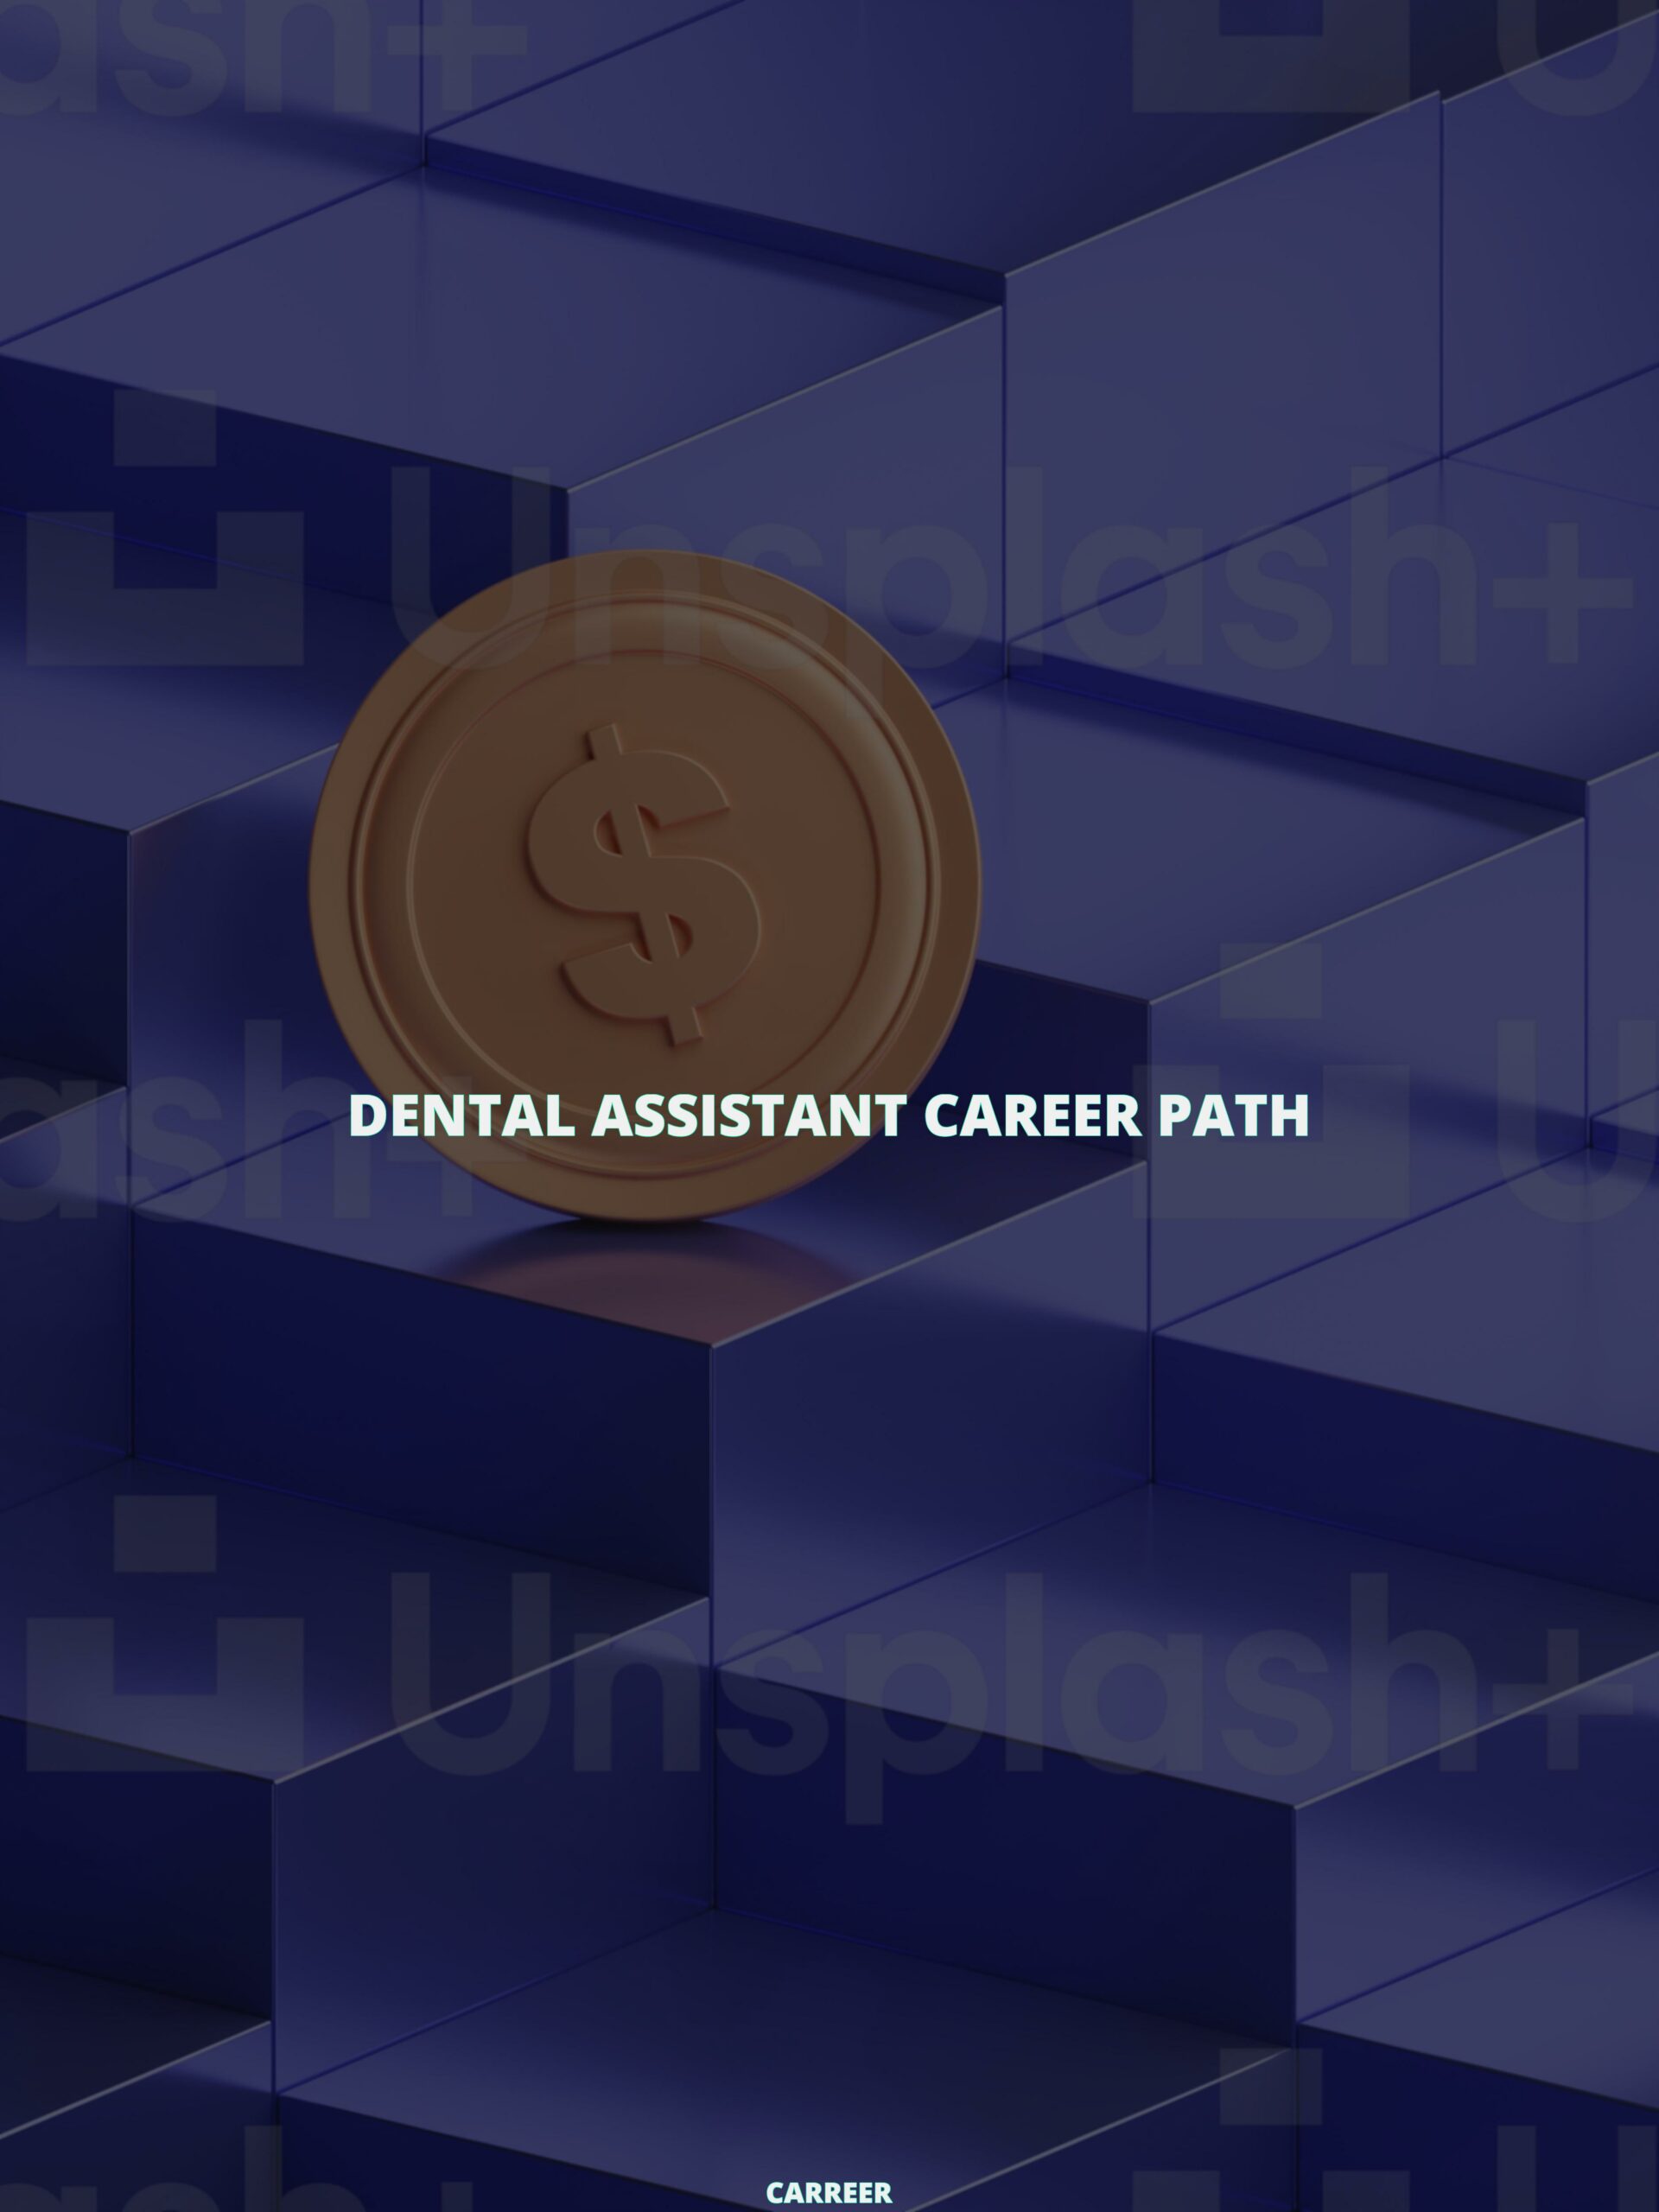 Dental assistant career path